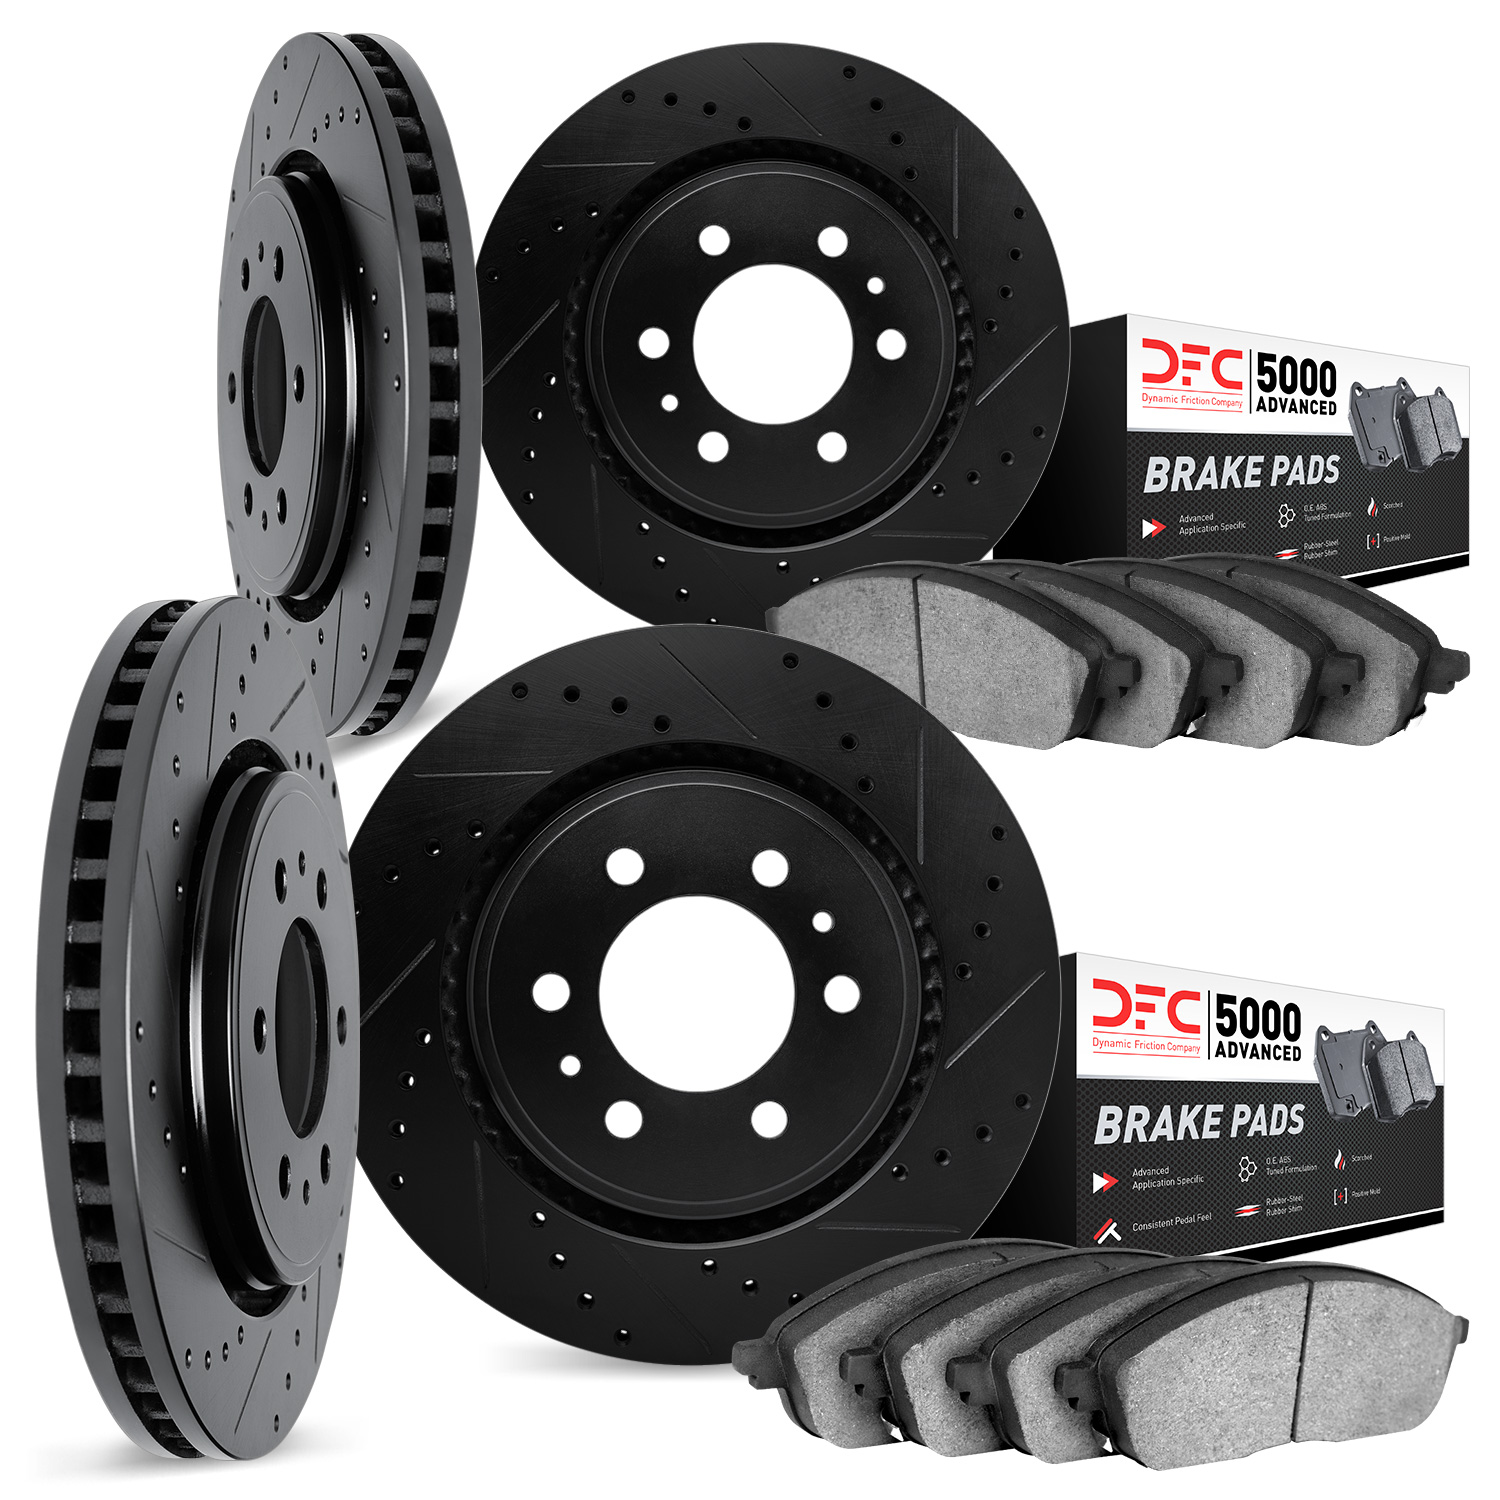 8504-40232 Drilled/Slotted Brake Rotors w/5000 Advanced Brake Pads Kit [Black], 2007-2018 Multiple Makes/Models, Position: Front